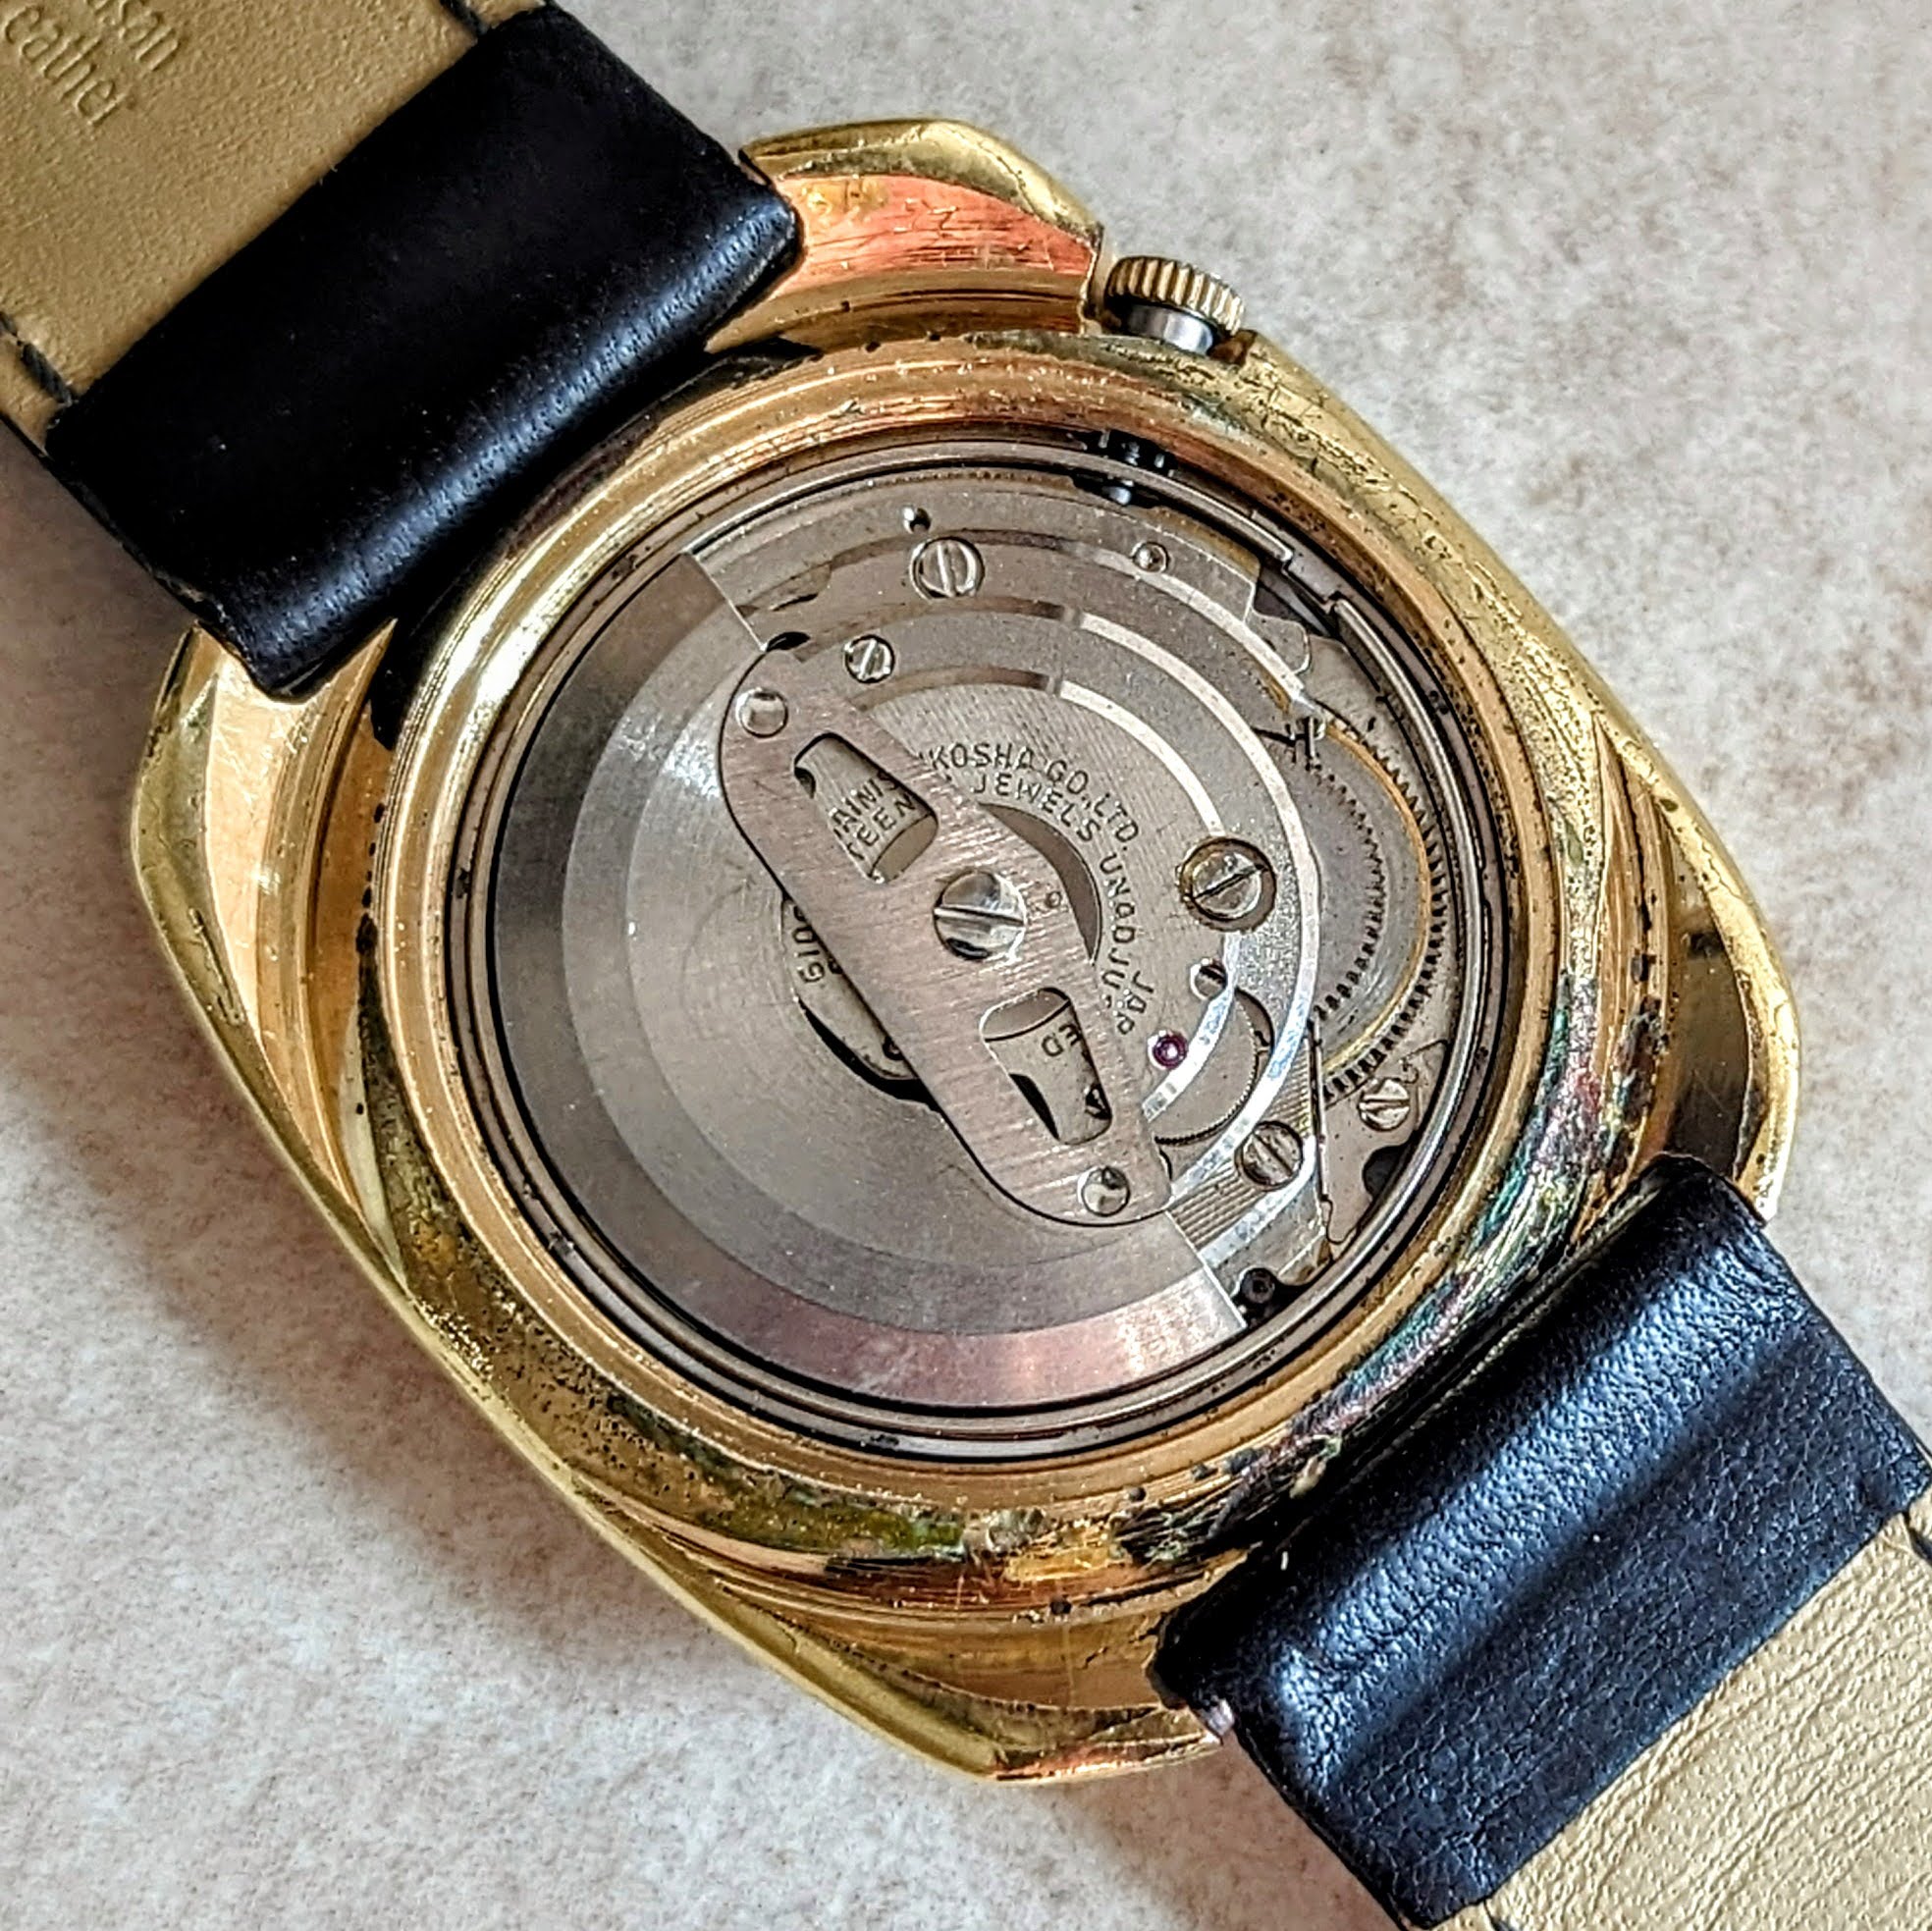 971 SEIKO DX Automatic Watch Day/Date Indicator Cal. 6106C 17Jewels Wristwatch